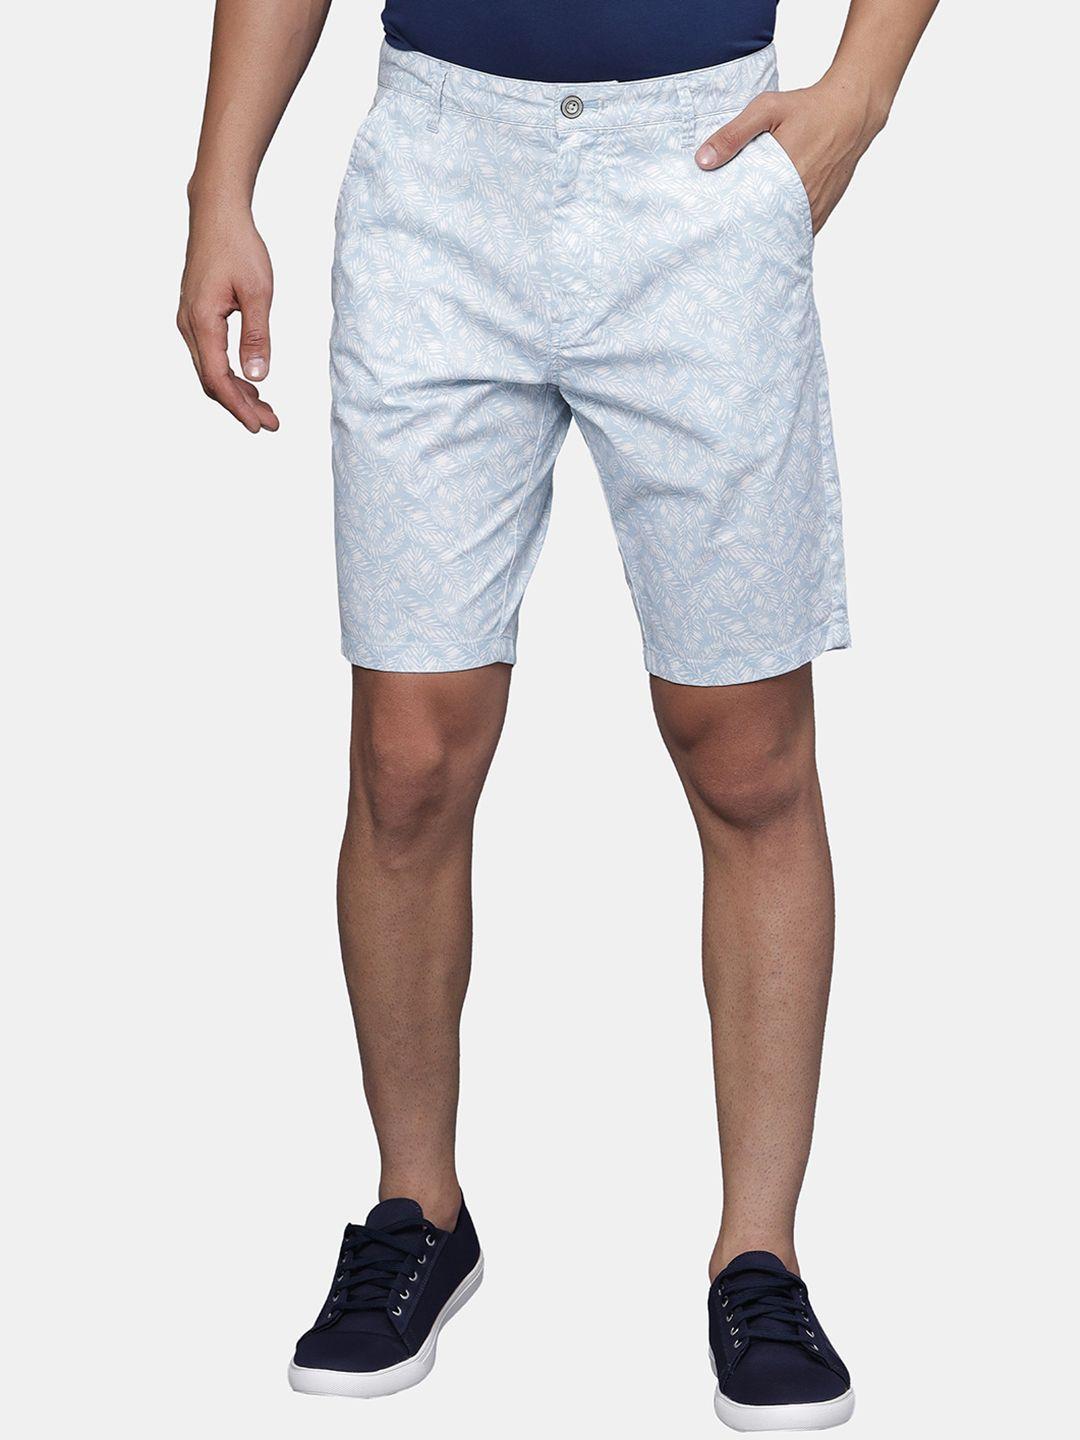 t-base men floral printed shorts